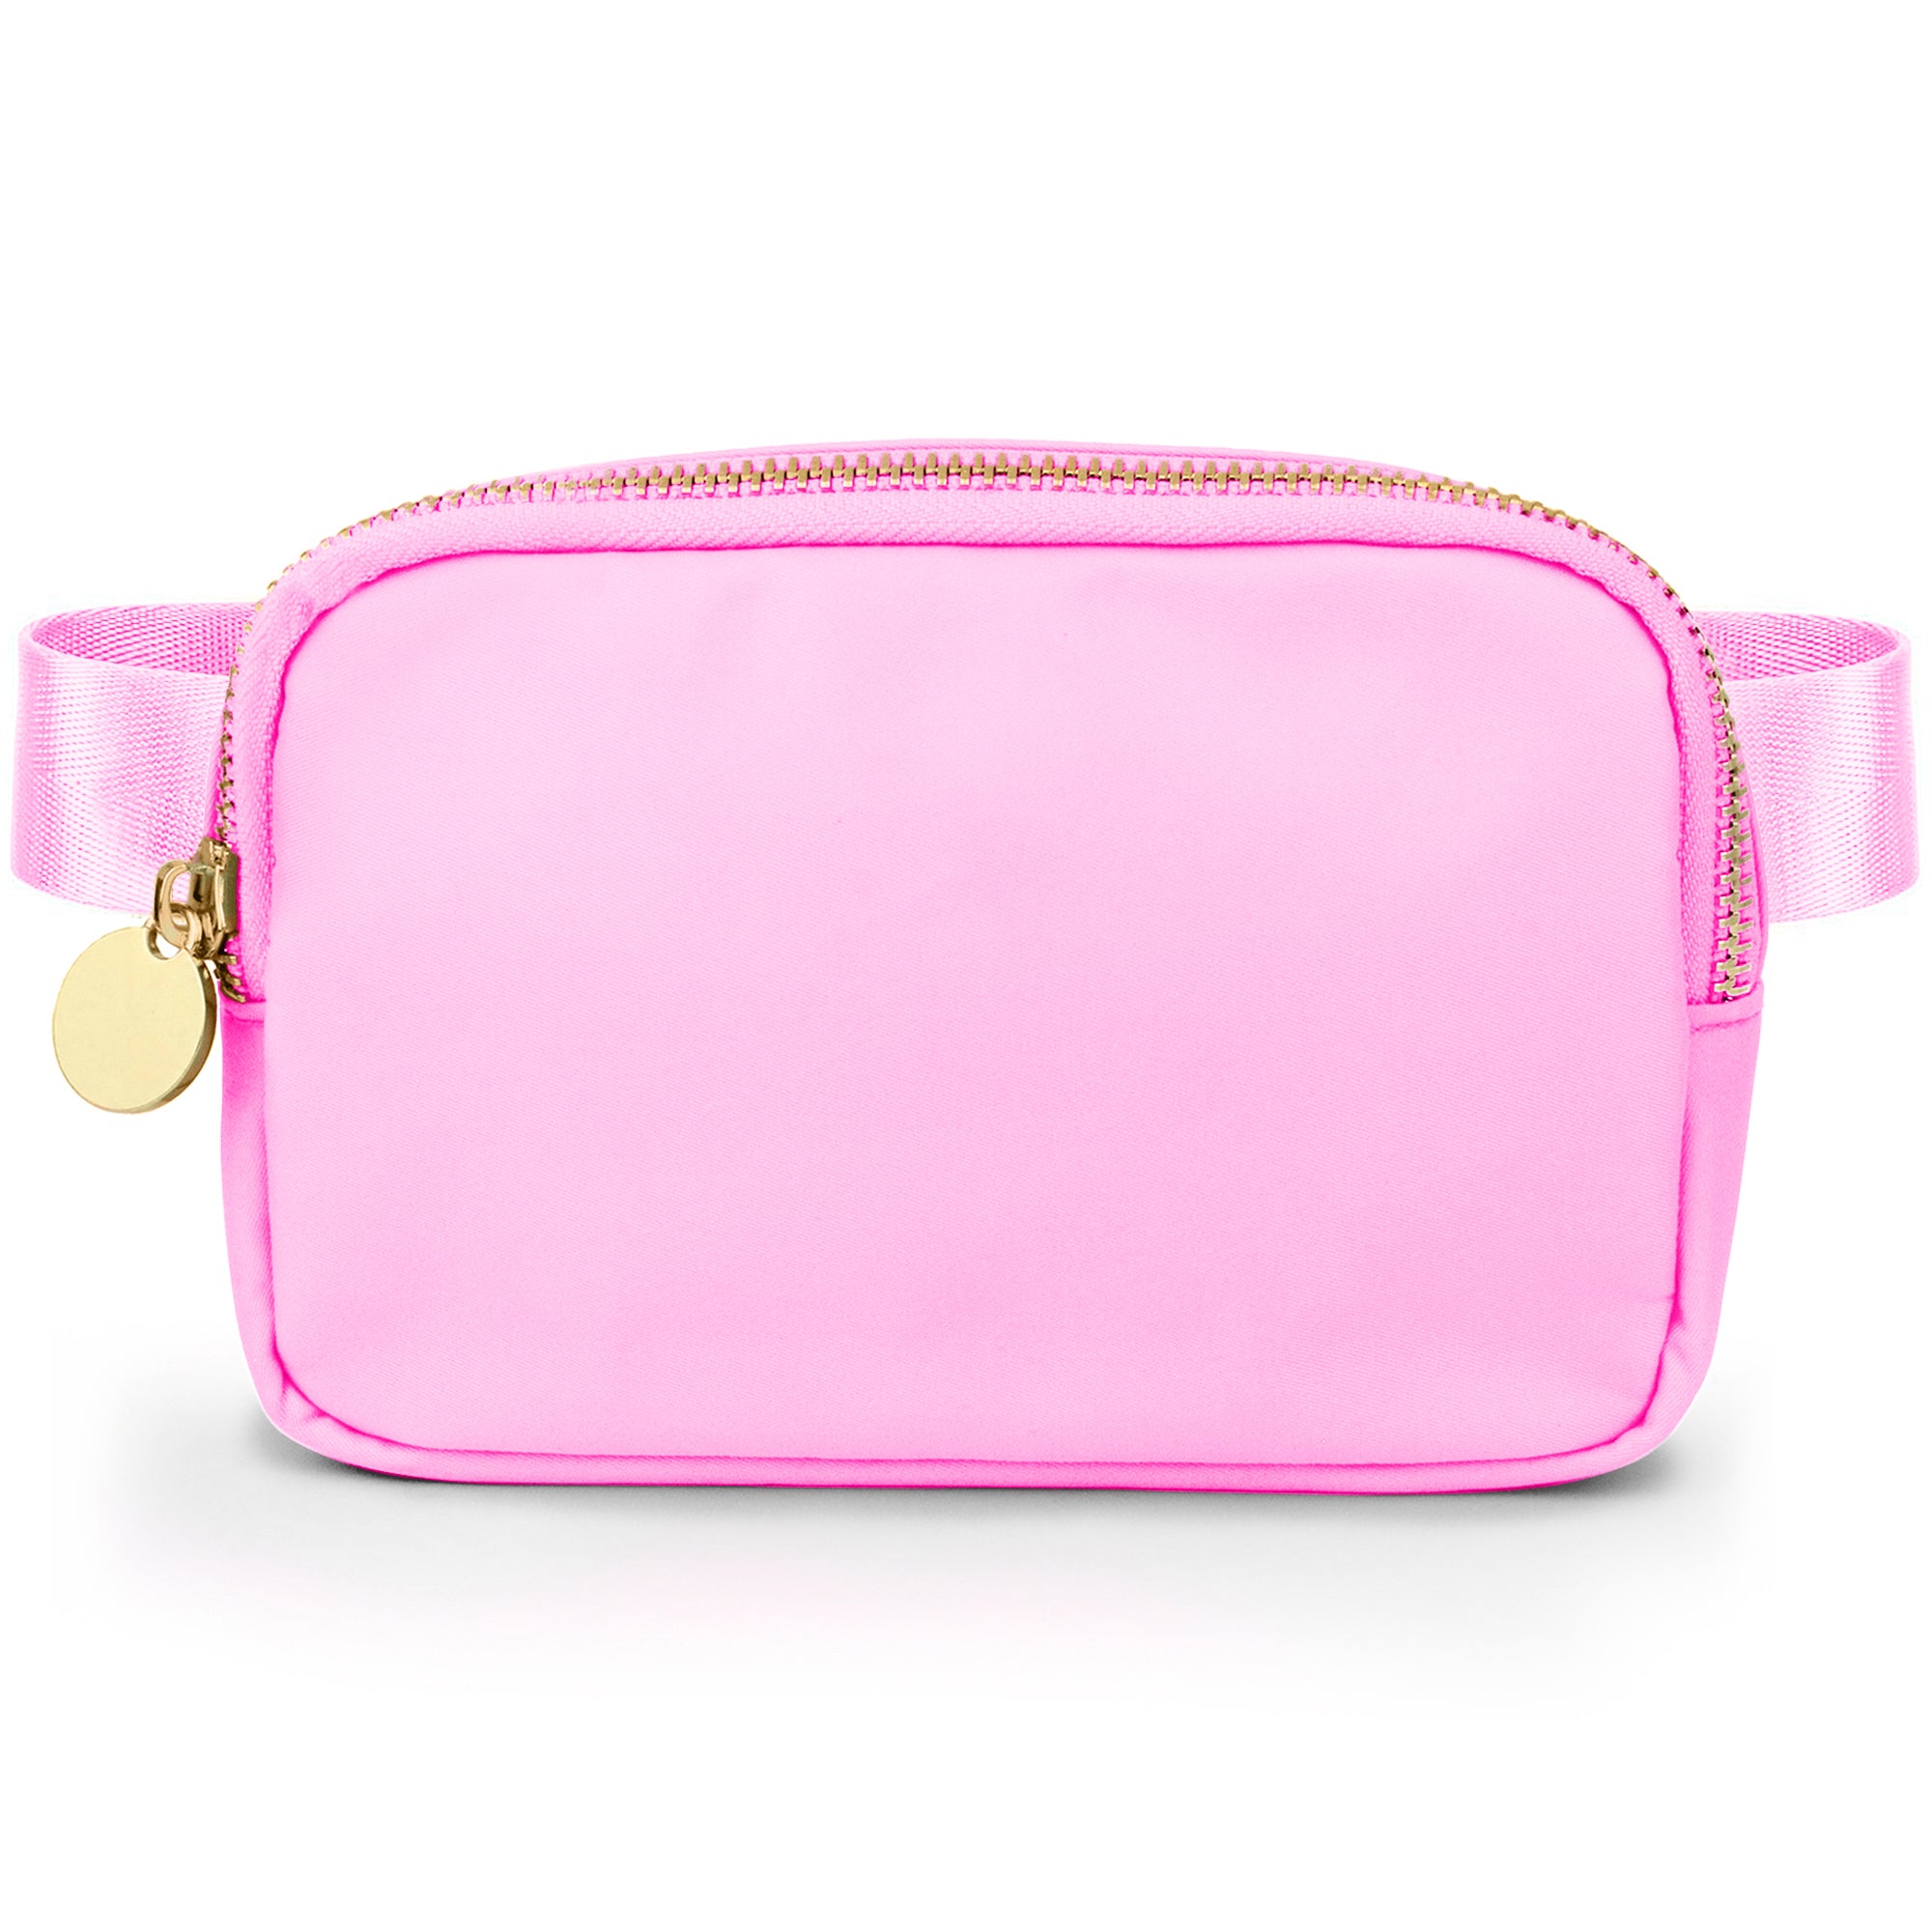 Nylon Belt Bag - Hot Pink Fanny Pack For Women - Crossbody Bag Waist Pack Bum Bag